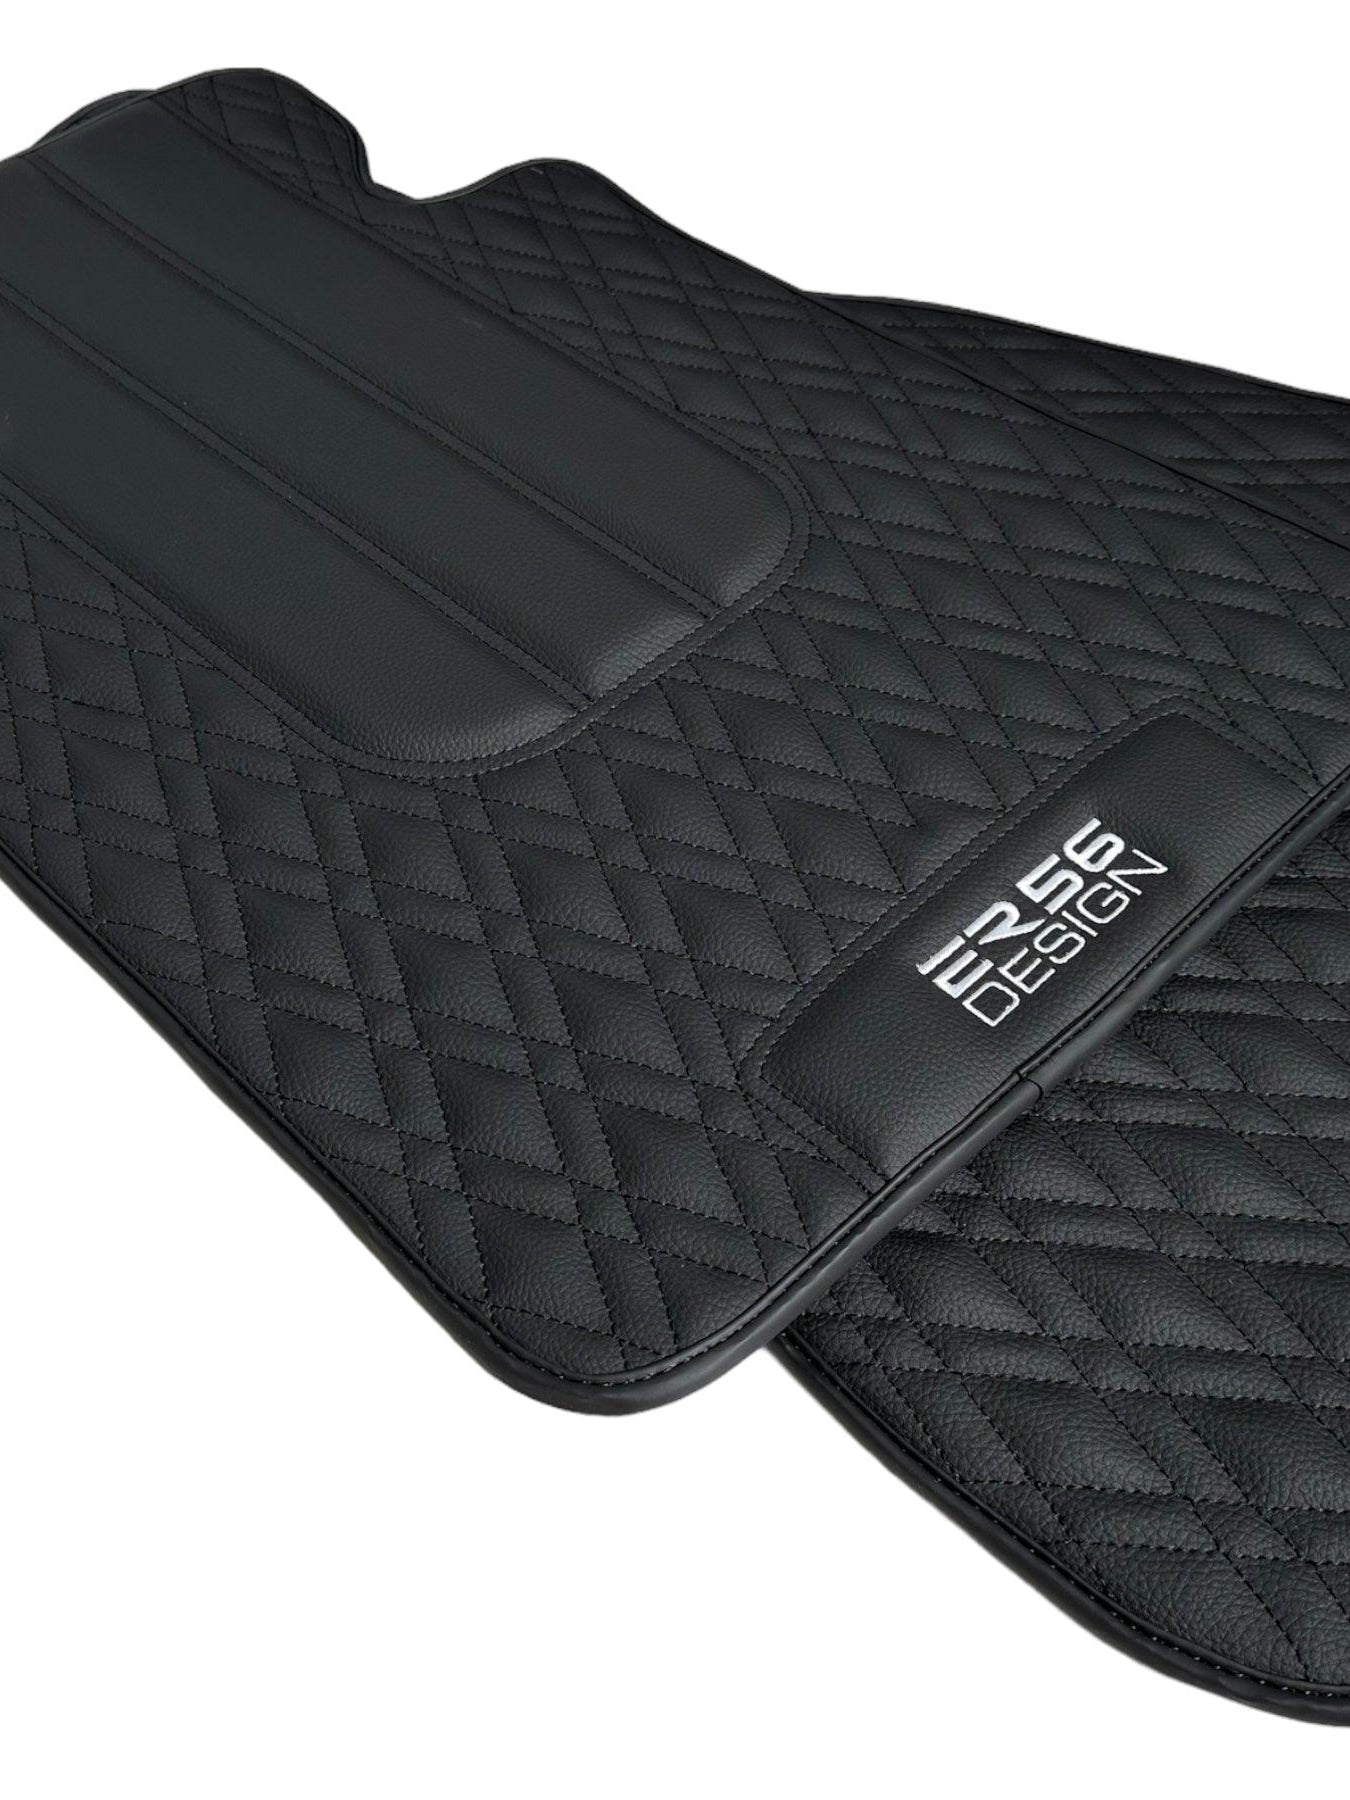 Floor Mats For BMW Z4 Series E89 Black Leather Er56 Design - AutoWin